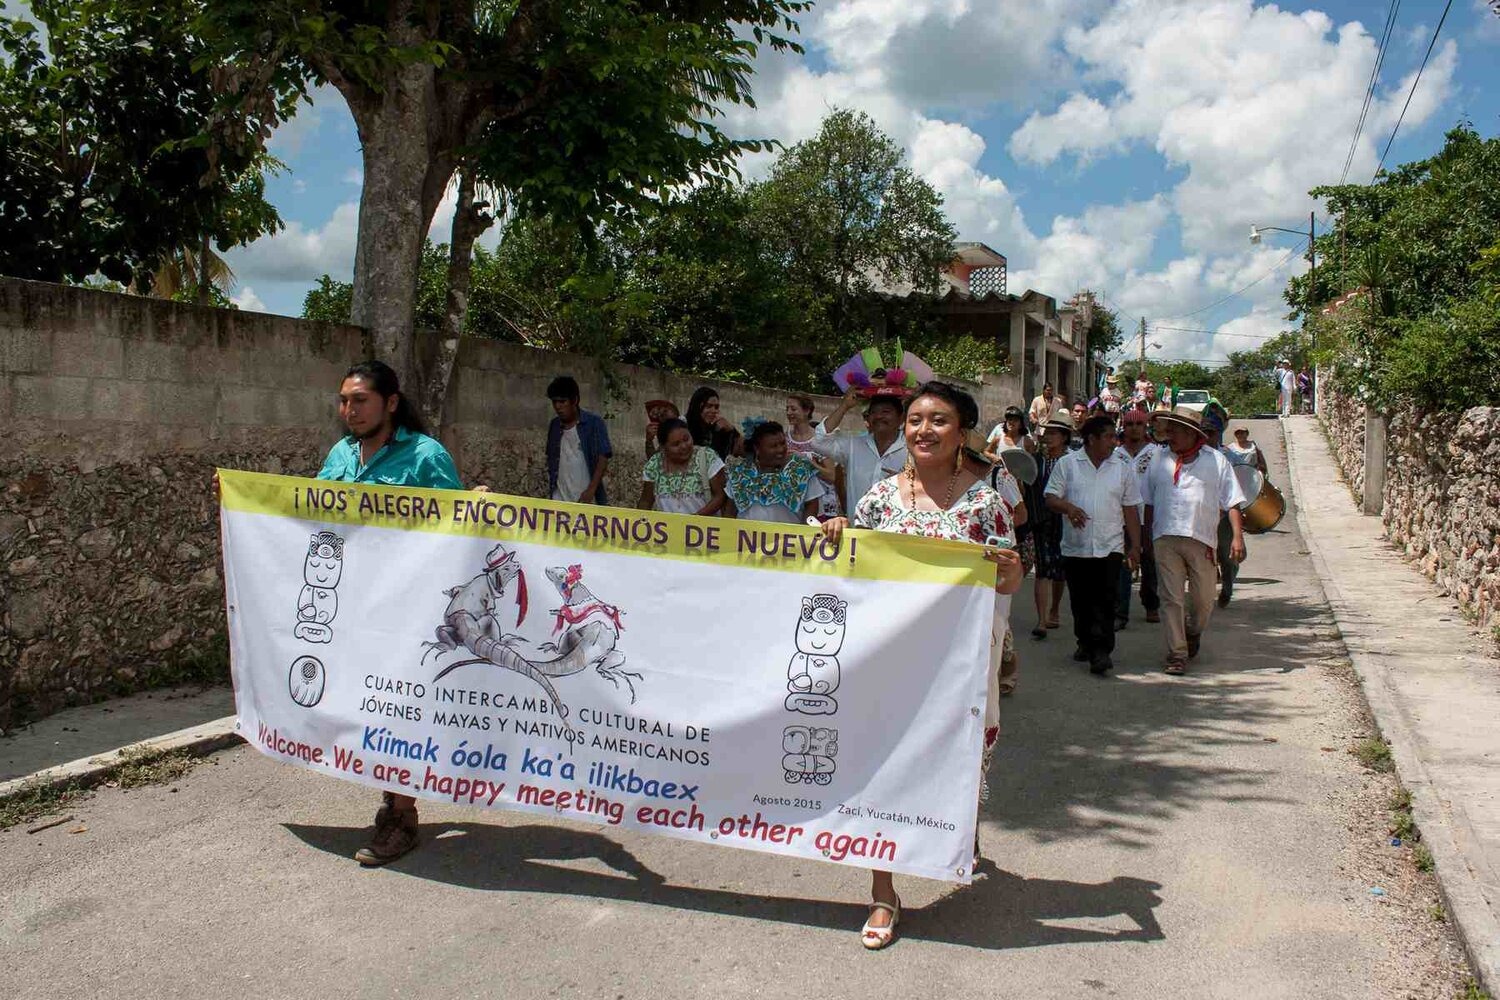  - The Yakanal Indigenous Youth Cultural Exchange group on parade in Valladolid, Yucatan, Mexico. (Photo Credit: Julian Cruz Cortes, Yakanal)